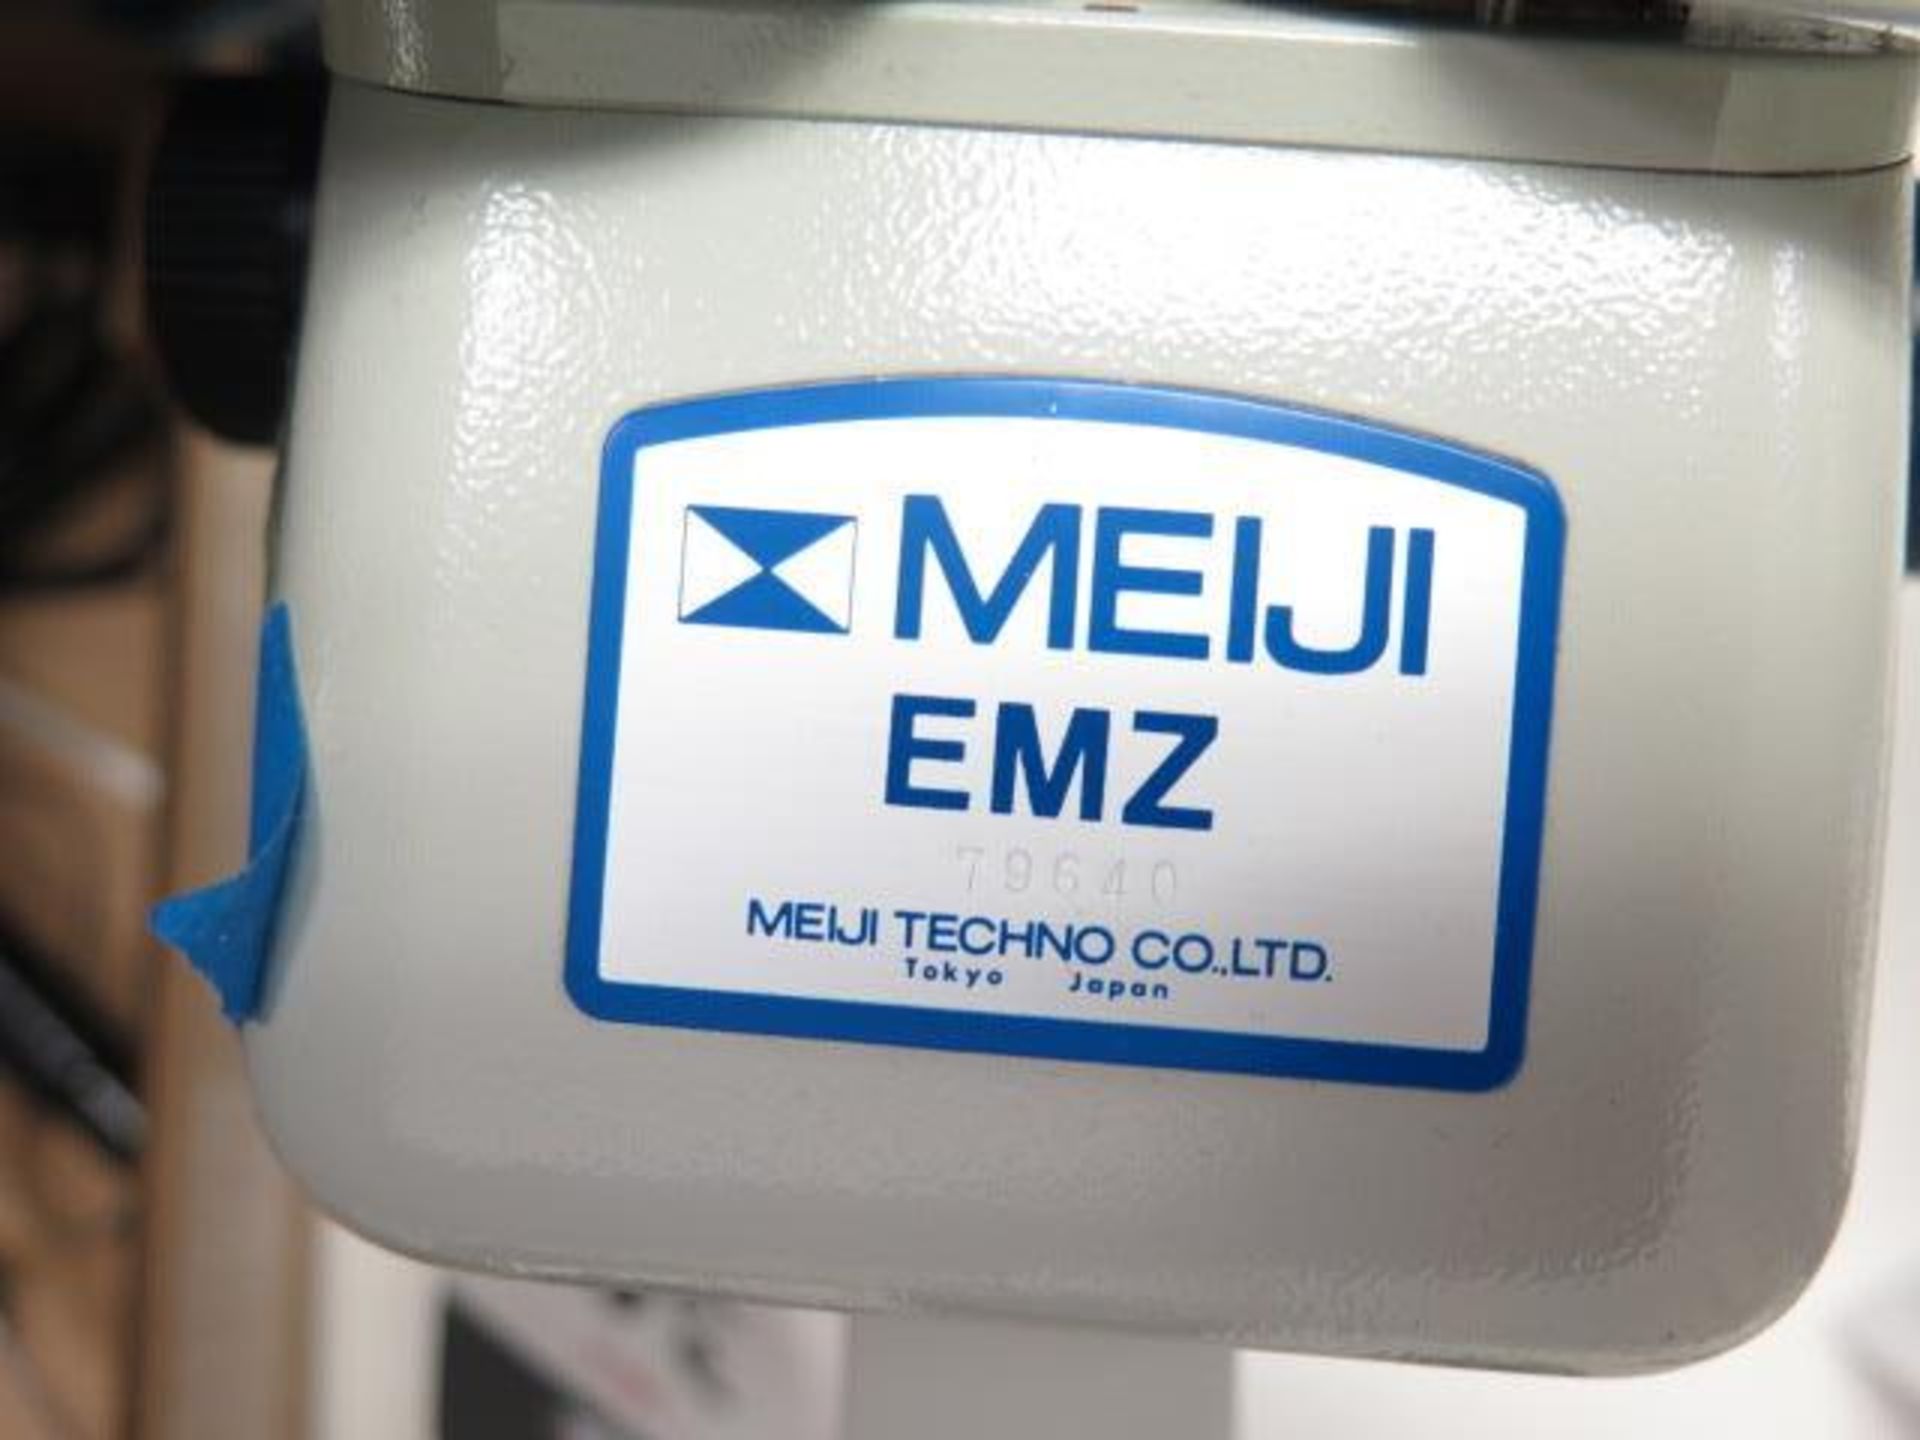 Meiji EZM Stereo Microscope (SOLD AS-IS - NO WARRANTY) - Image 6 of 6